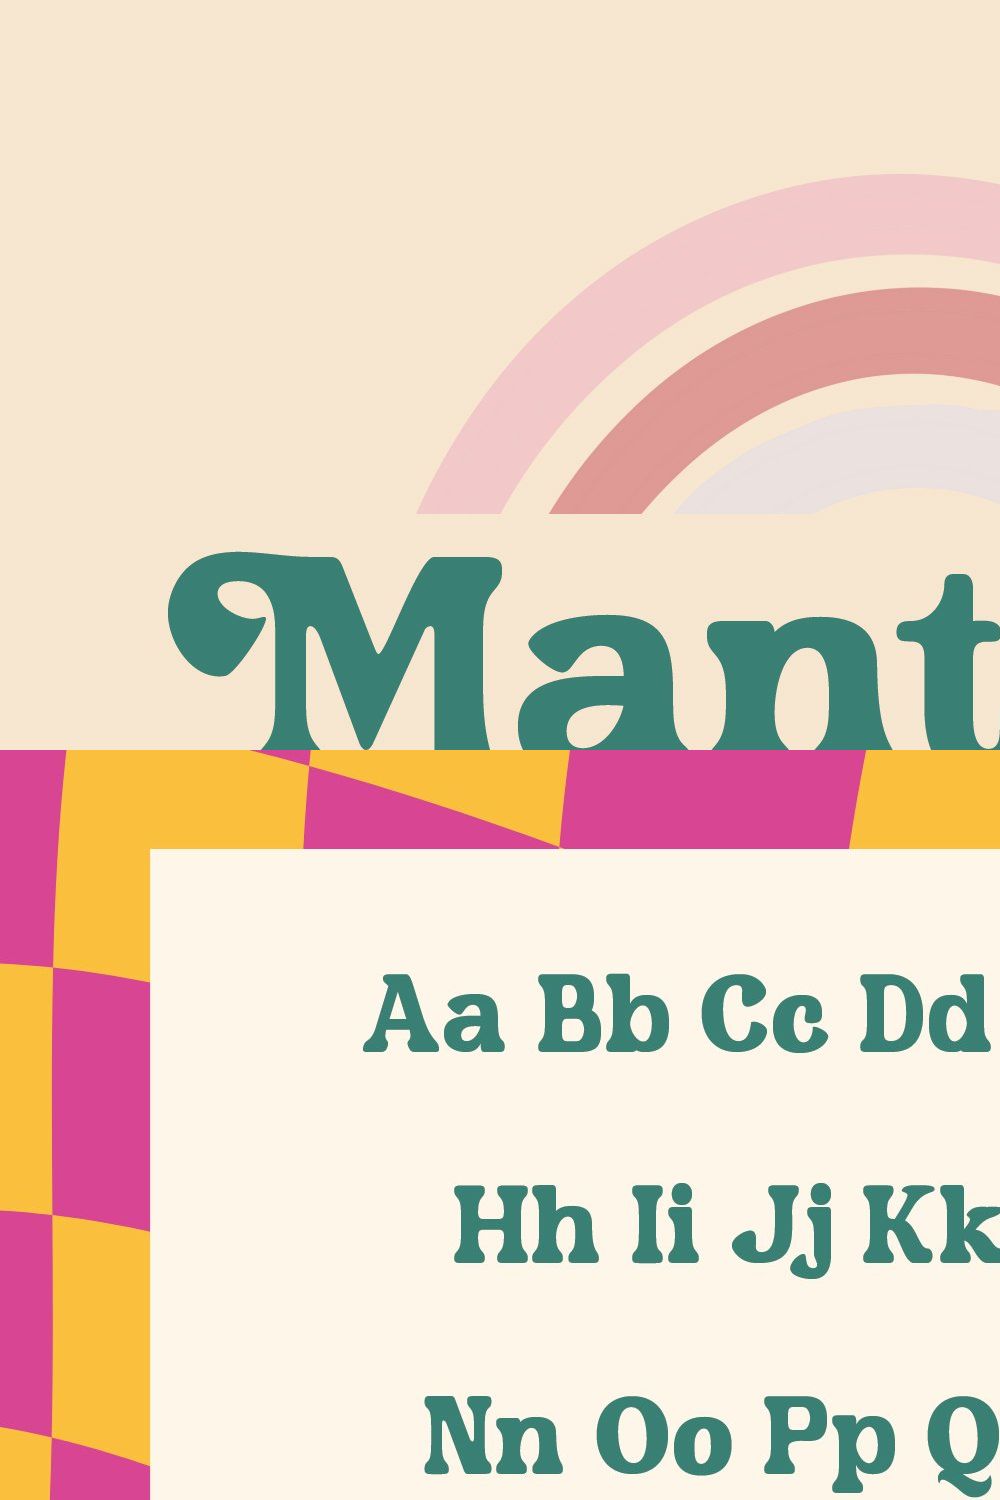 Mantana - Retro Vintage DIsplay font pinterest preview image.